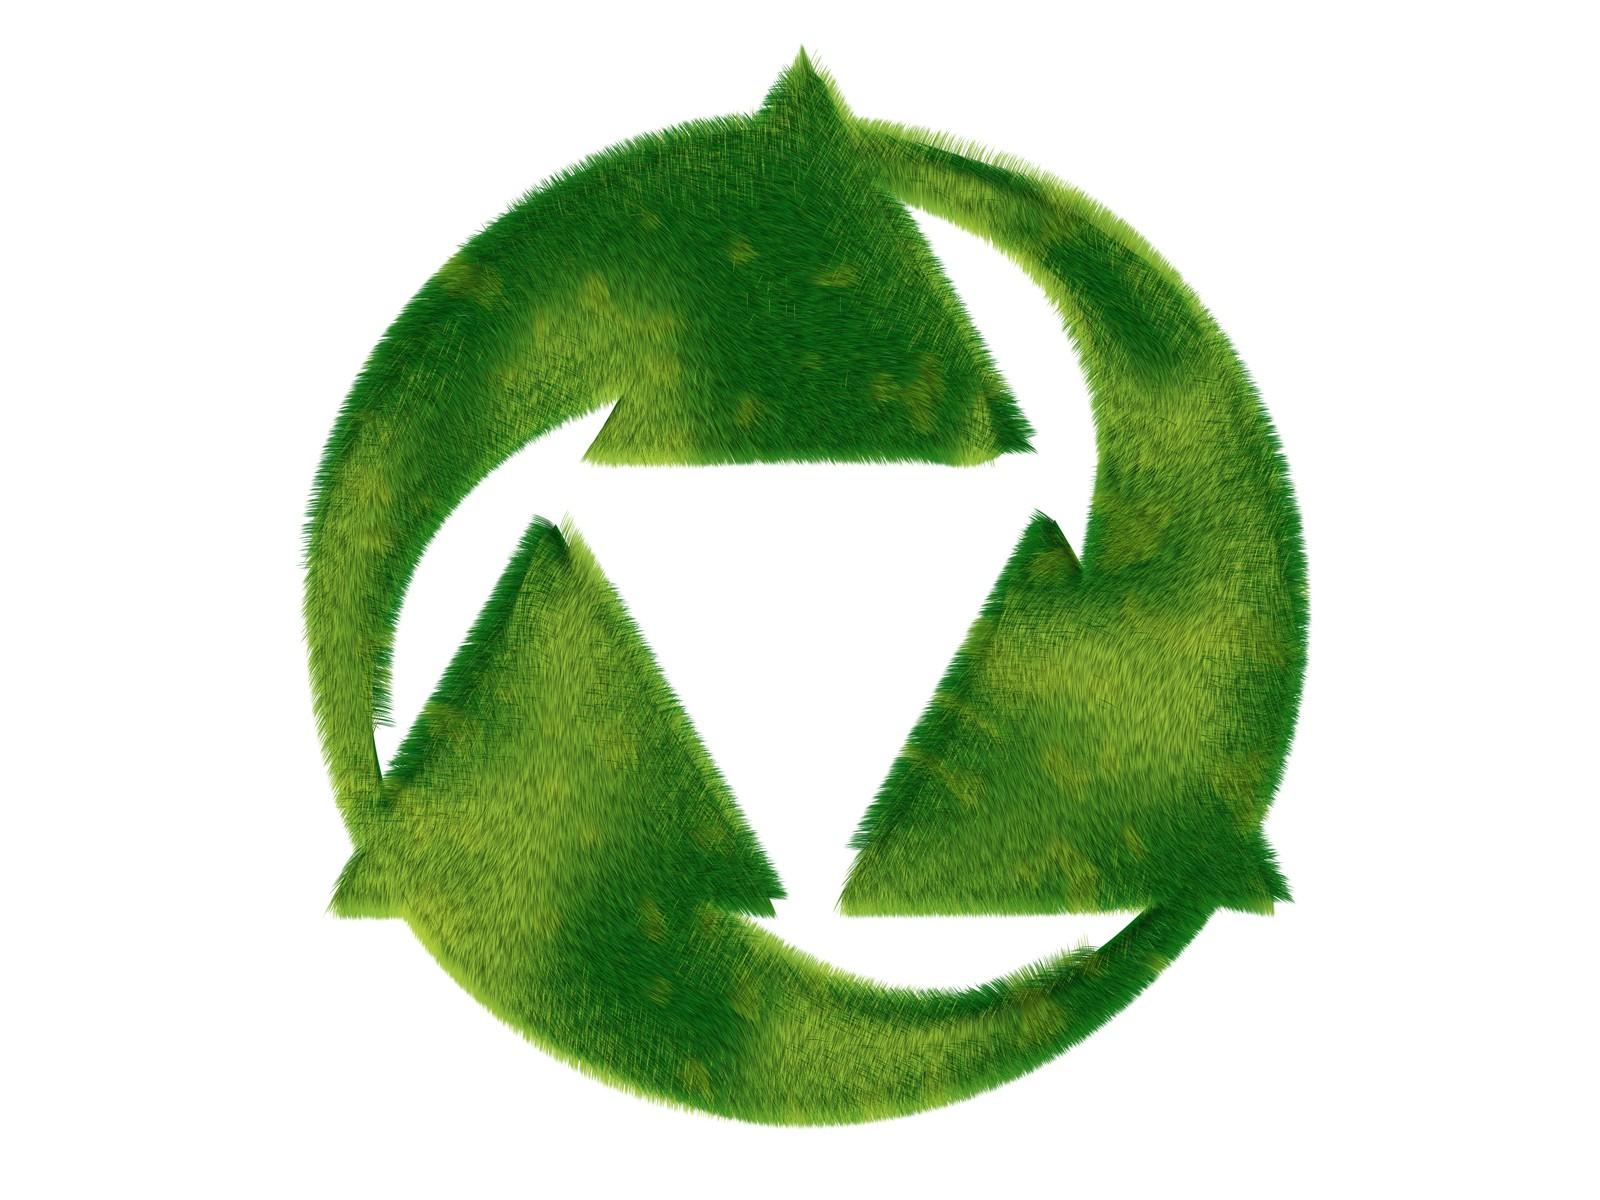 Eco Friendly Symbols Symbols And Environmental